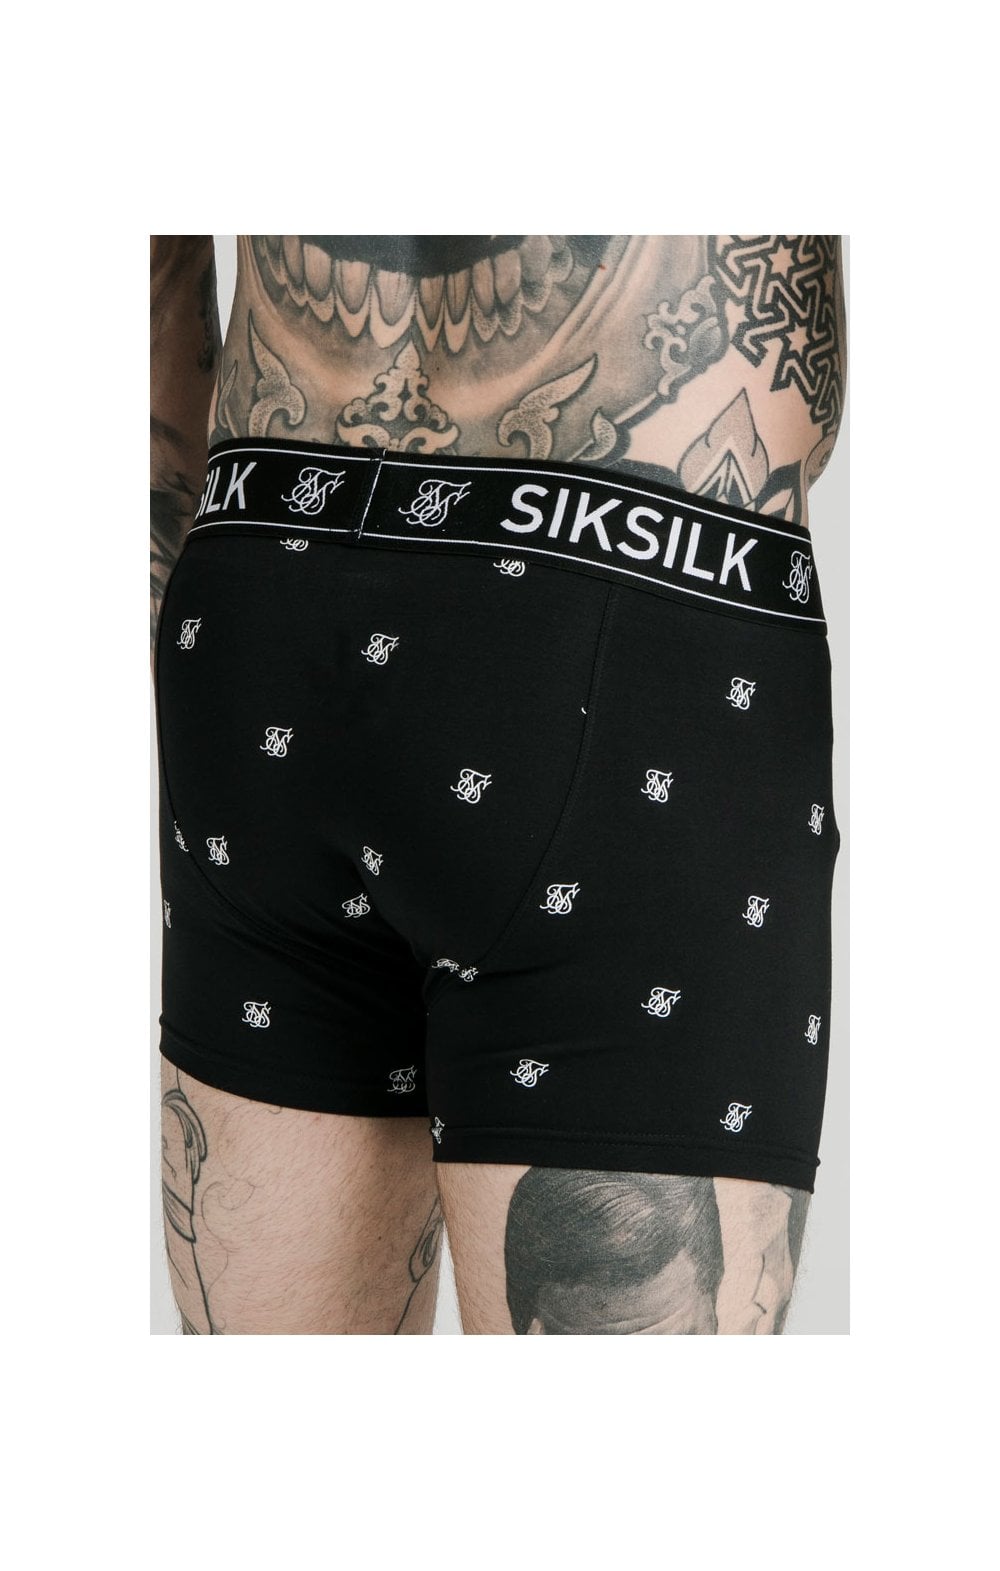 SikSilk Logo Taped Boxer Shorts (2 Pack) - White &amp; Black Pack of 2 Boxers - 1 White pair and 1 Black pair (3)